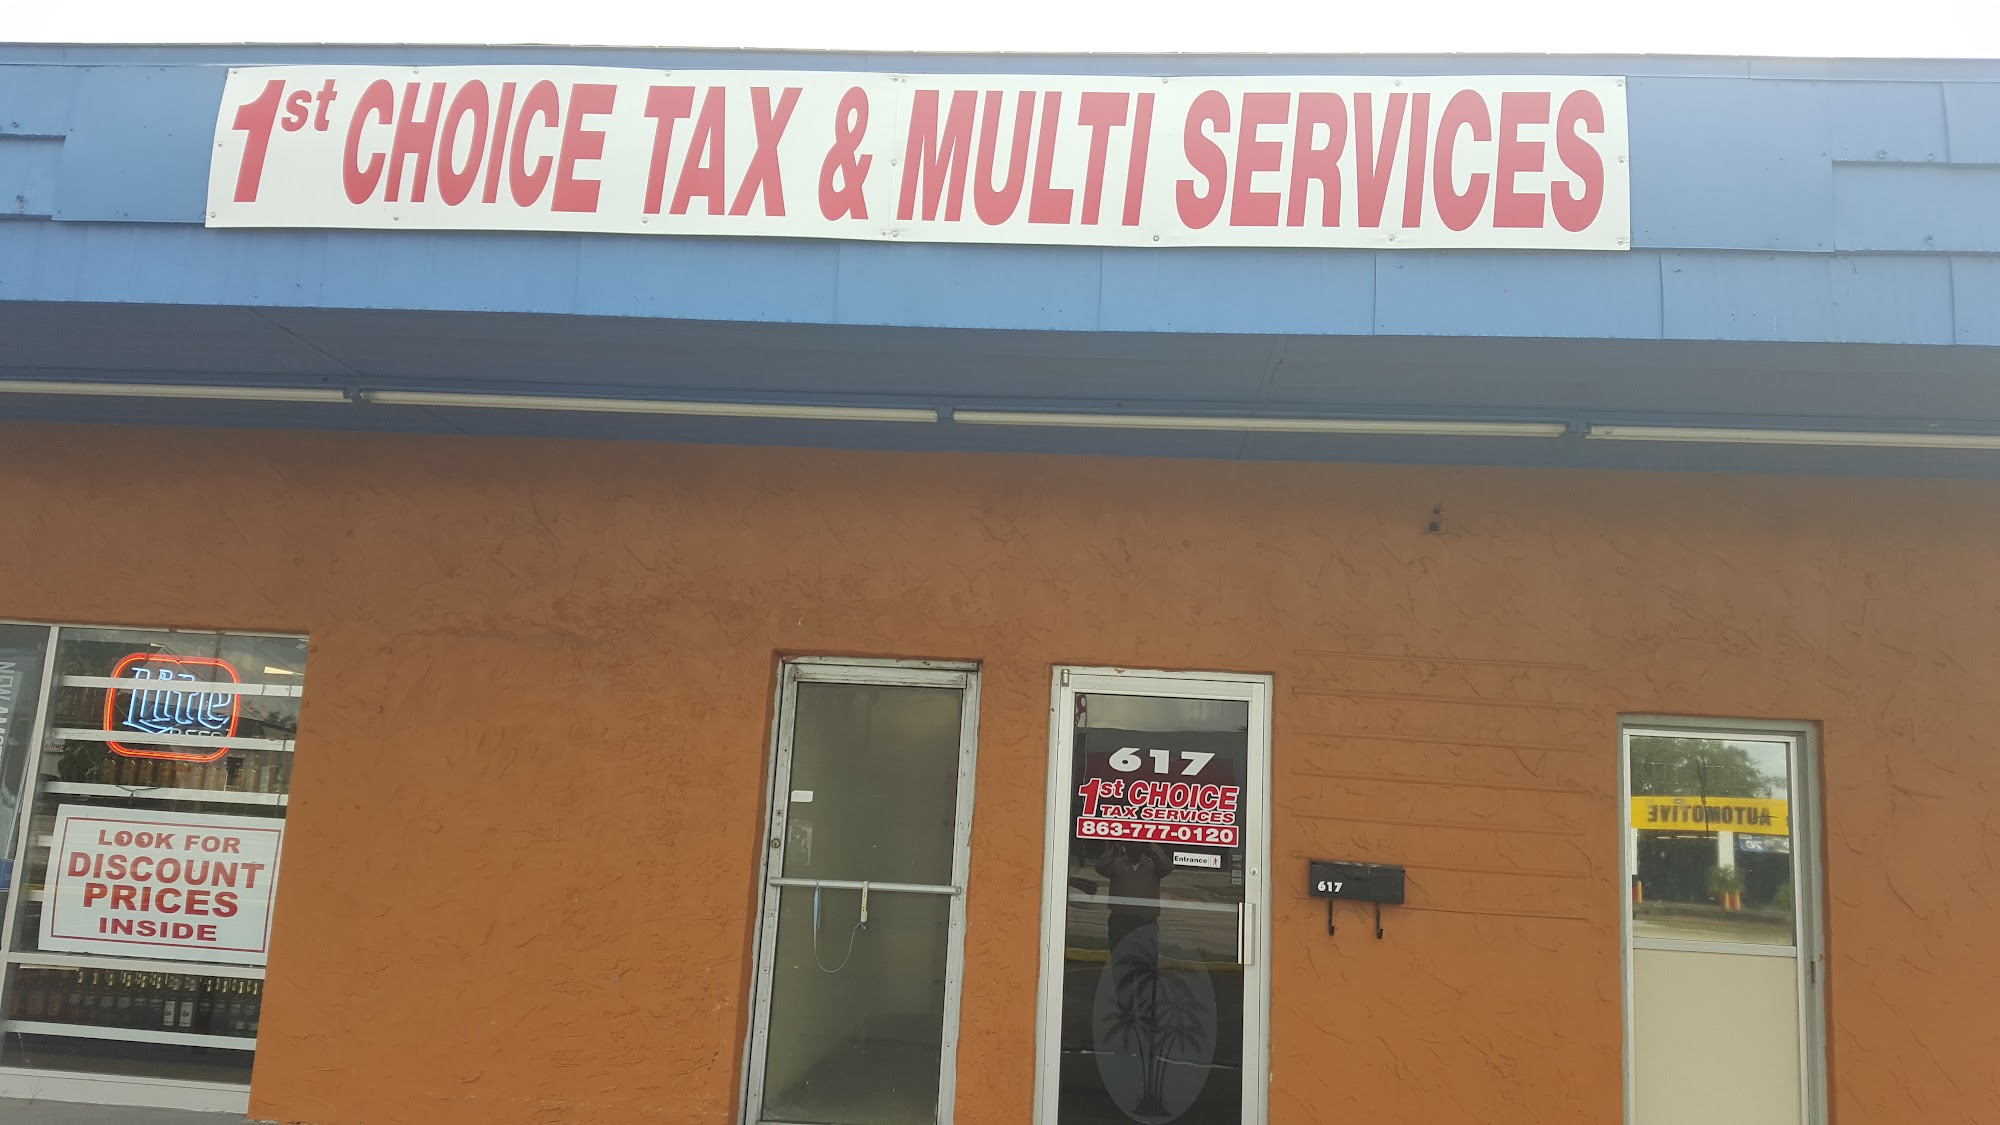 1st choice tax & multi services